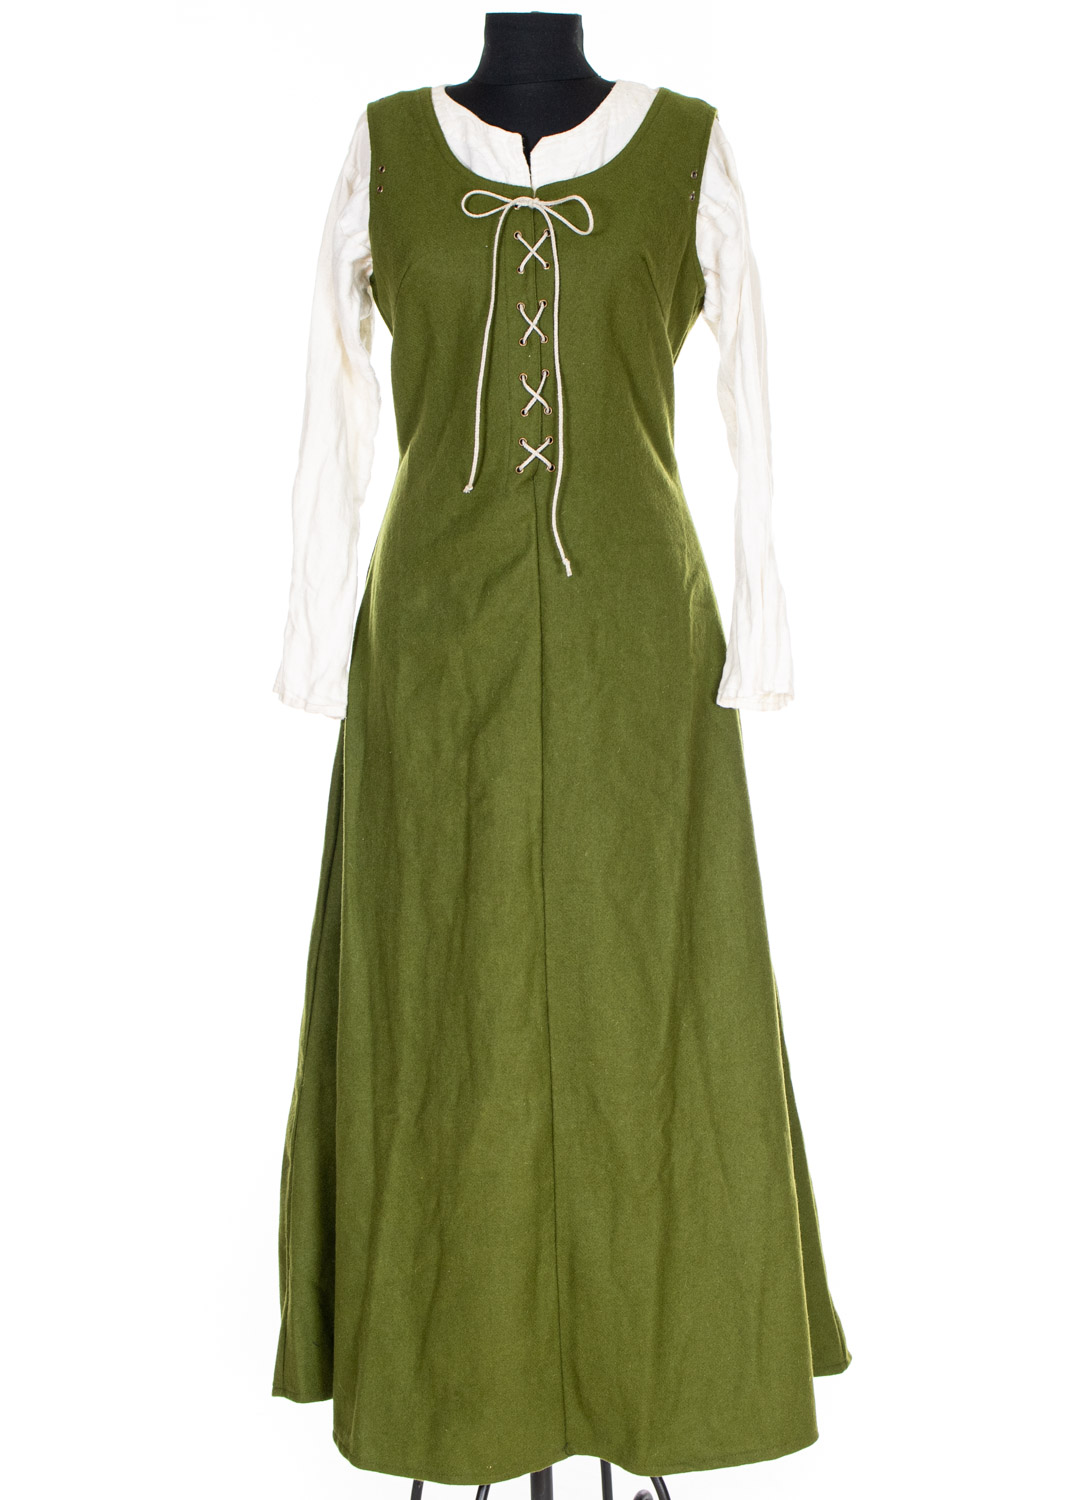 Sleeveless medieval dress